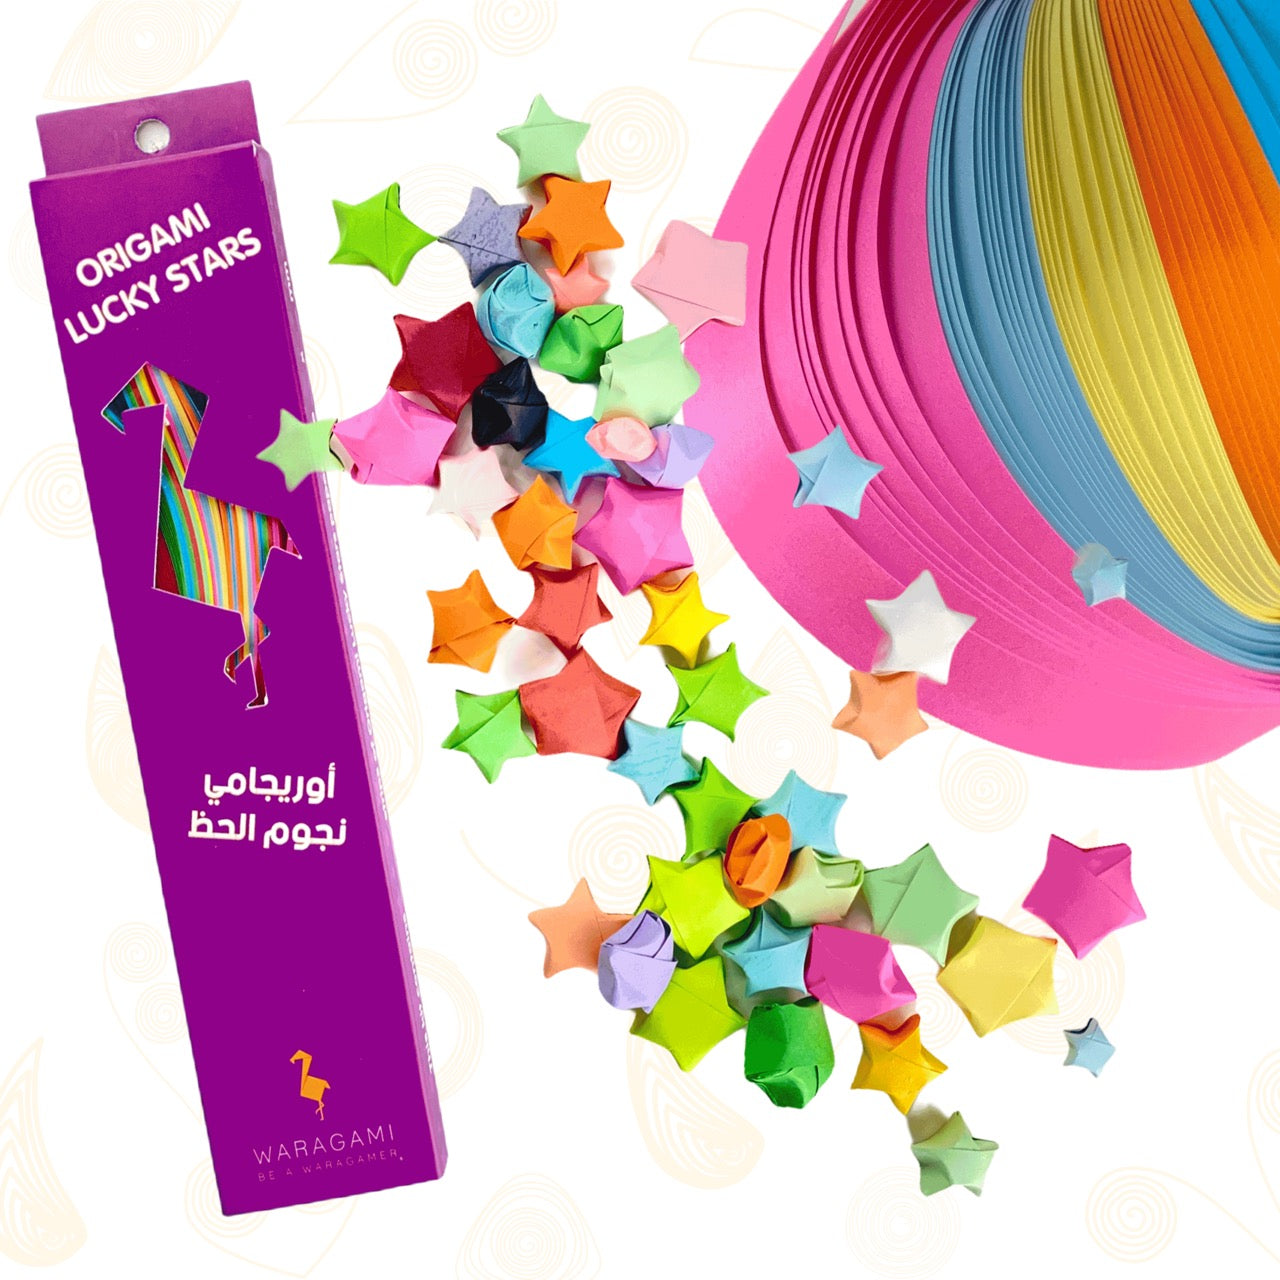 WARAGAMI Origami Lucky Stars Kit   صندوق ورقامي نجوم الحظ الملونة بفن الأوريجامي